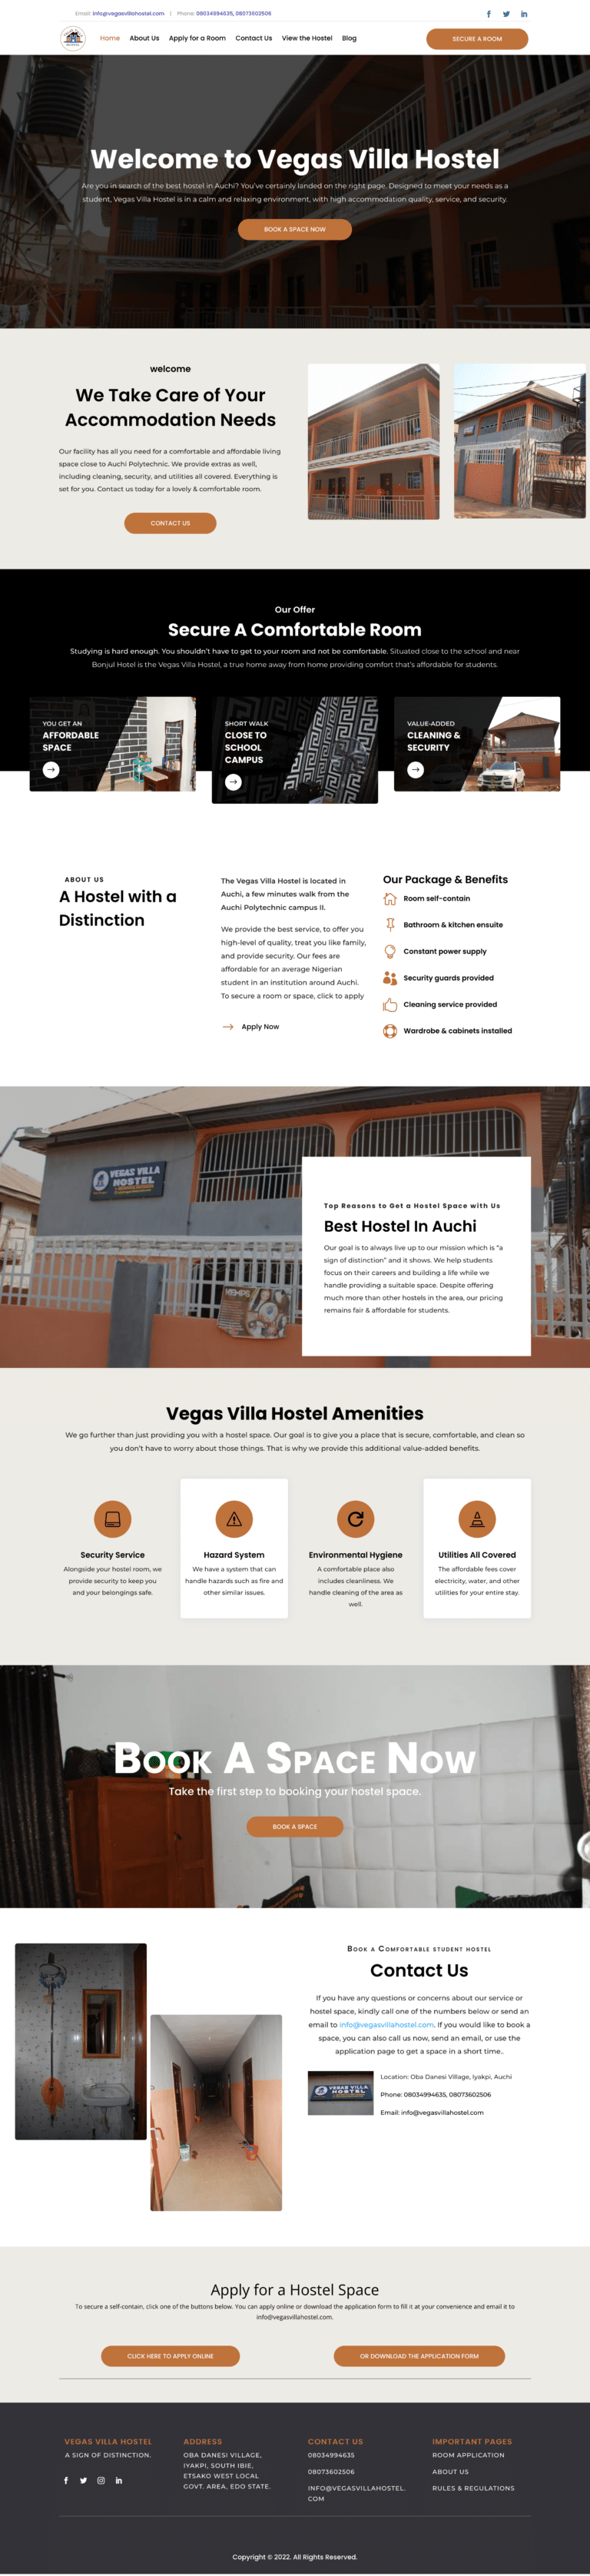 home page of vegas villa hostel